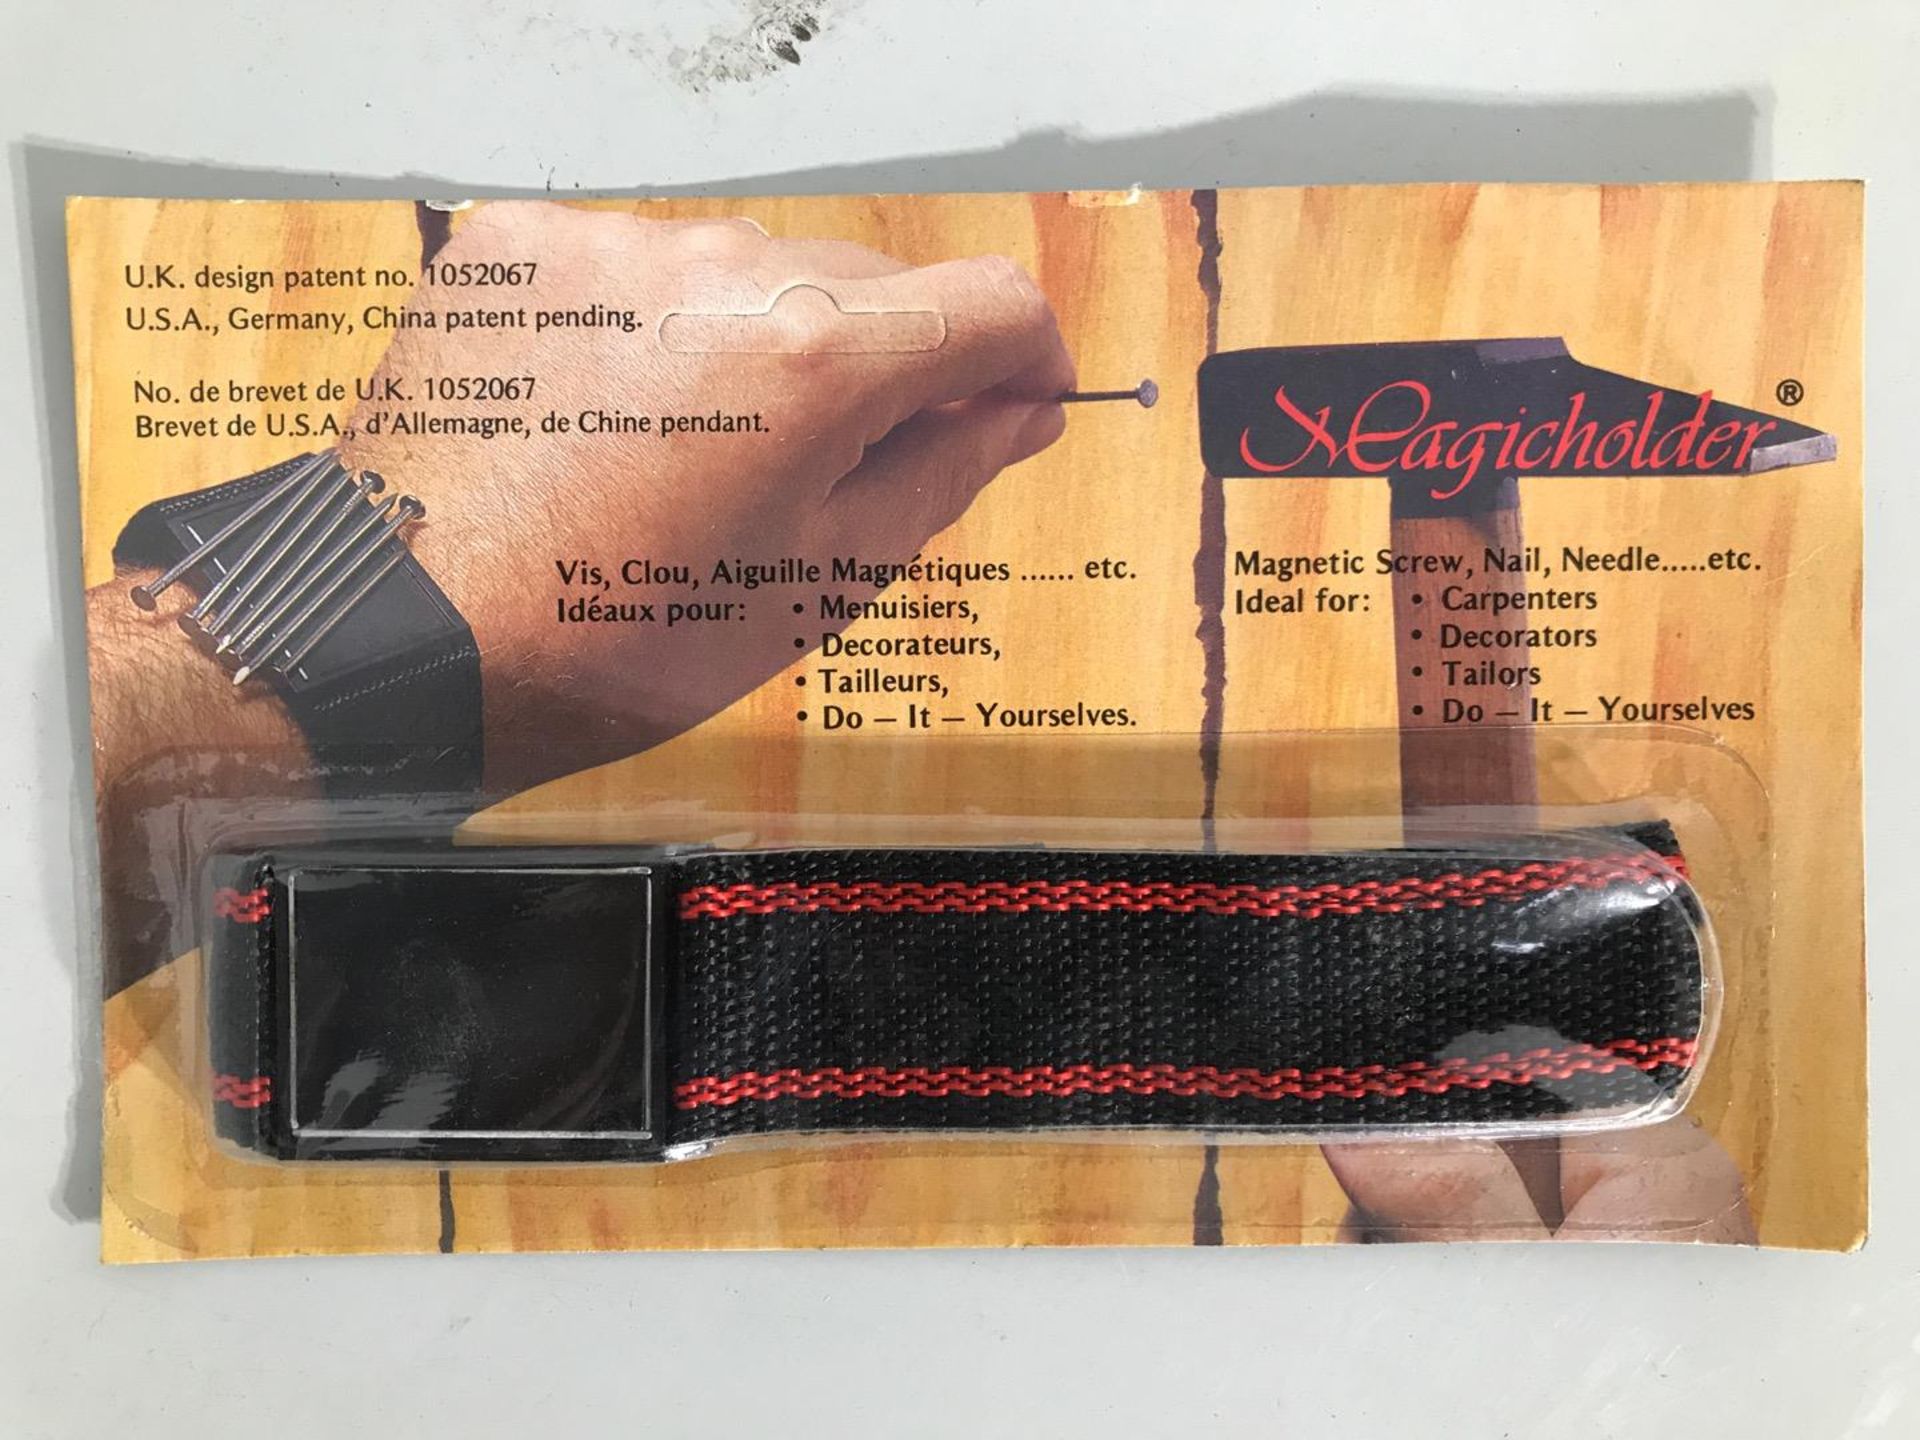 Carpenters magnetic wrist strap